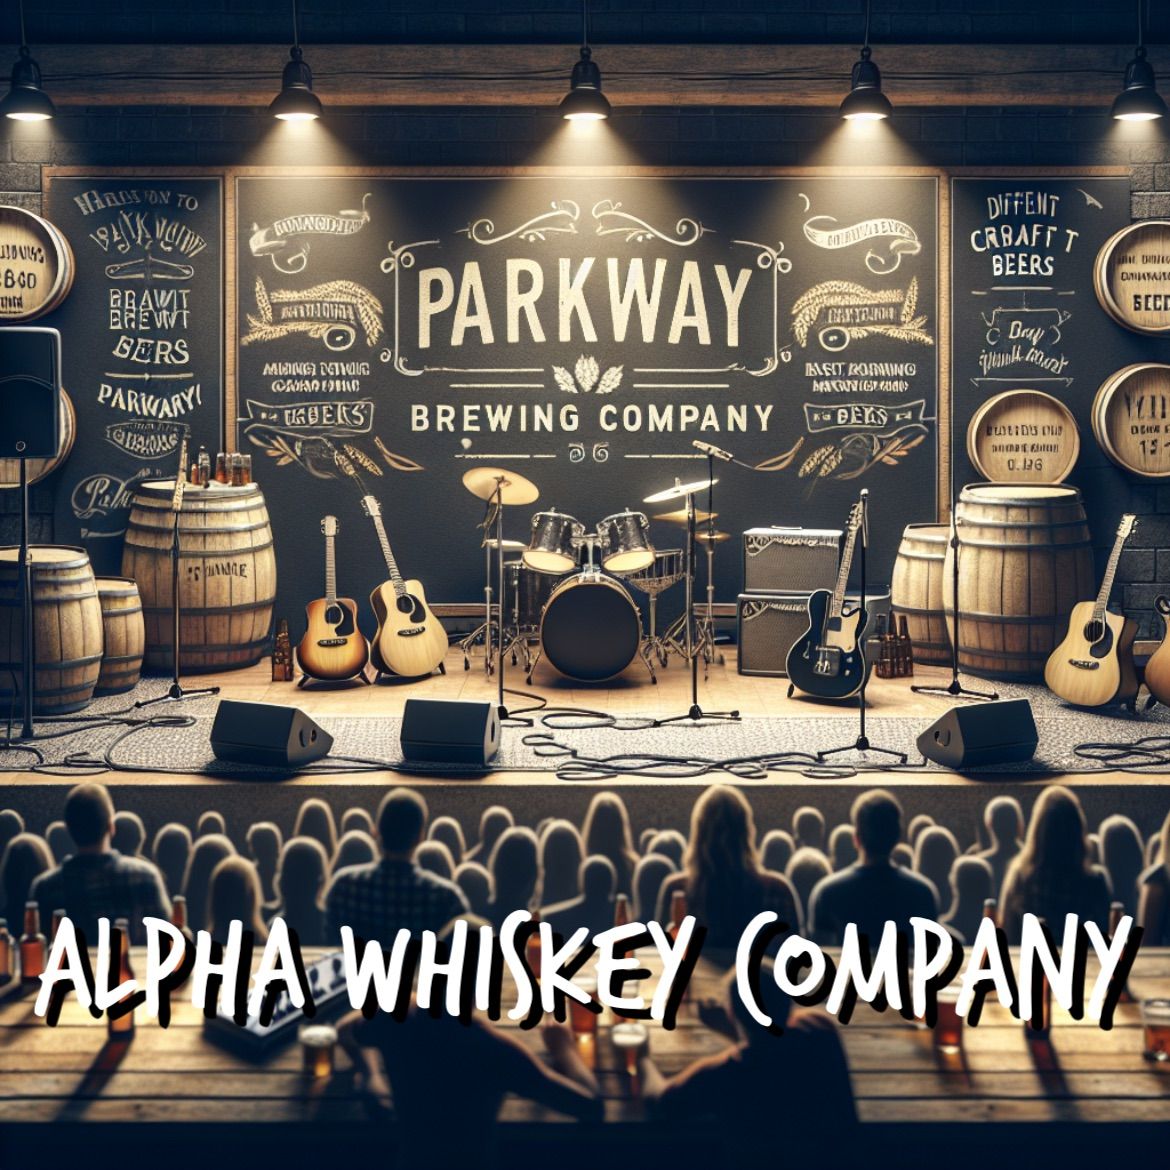 Alpha Whiskey Company debut at Parkway Brewing Company